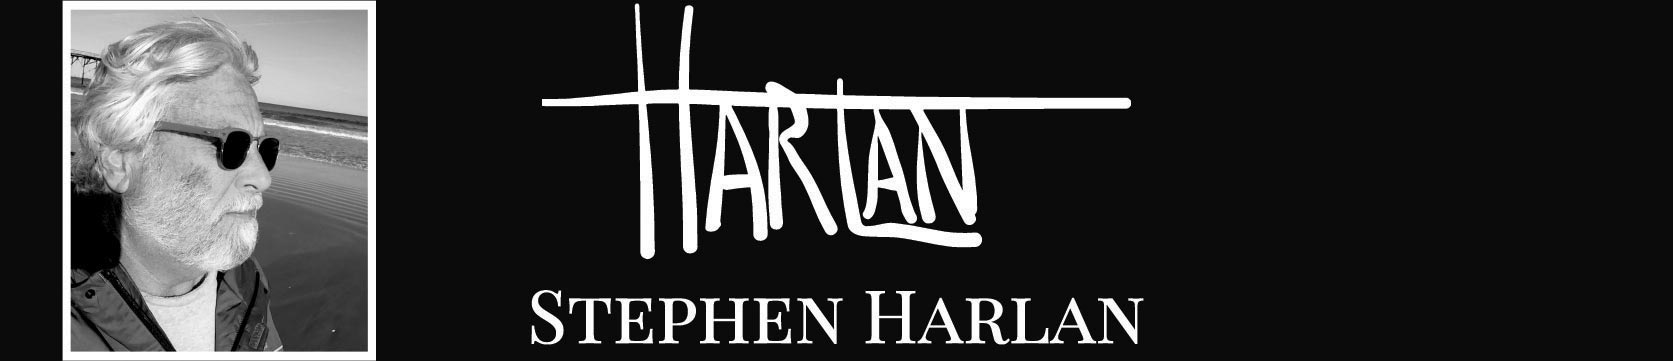 Stephen Harlan Artist